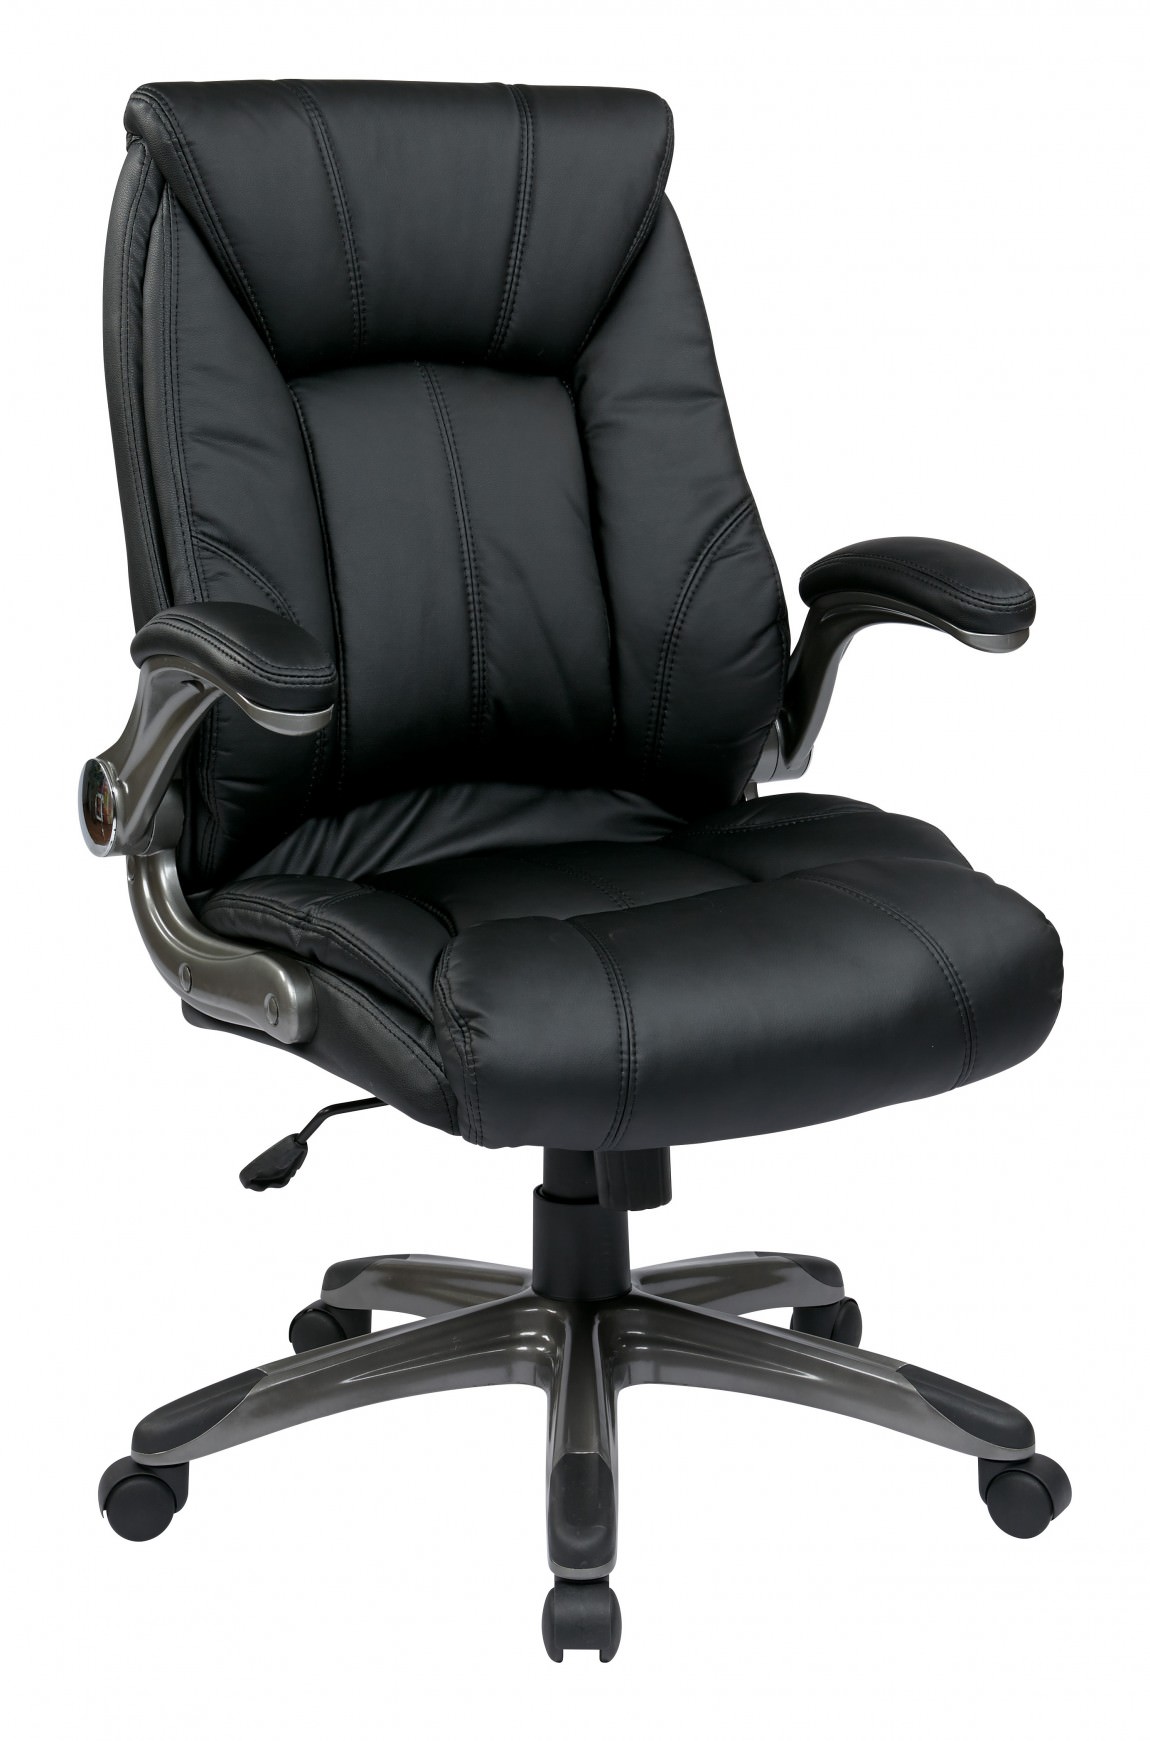 https://madisonliquidators.com/images/p/1150/31765-mid-back-task-chair-with-flip-up-arms-1.jpg